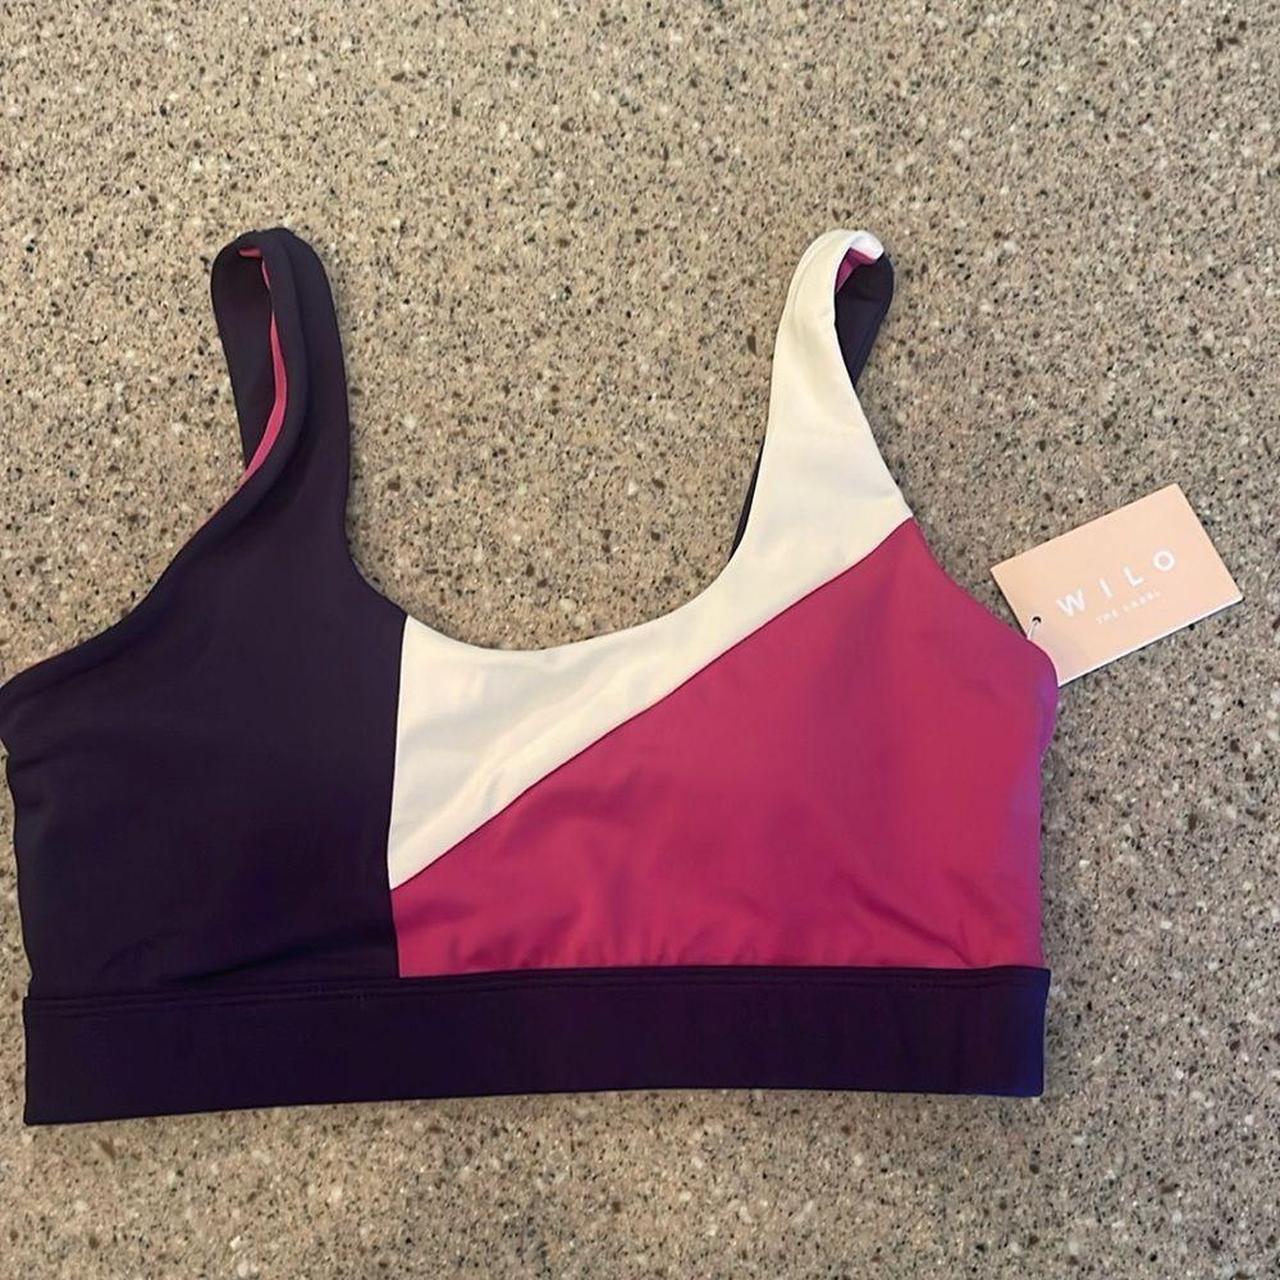 Wilo Sports Bra Pink Size XS - $12 (45% Off Retail) - From Jordan